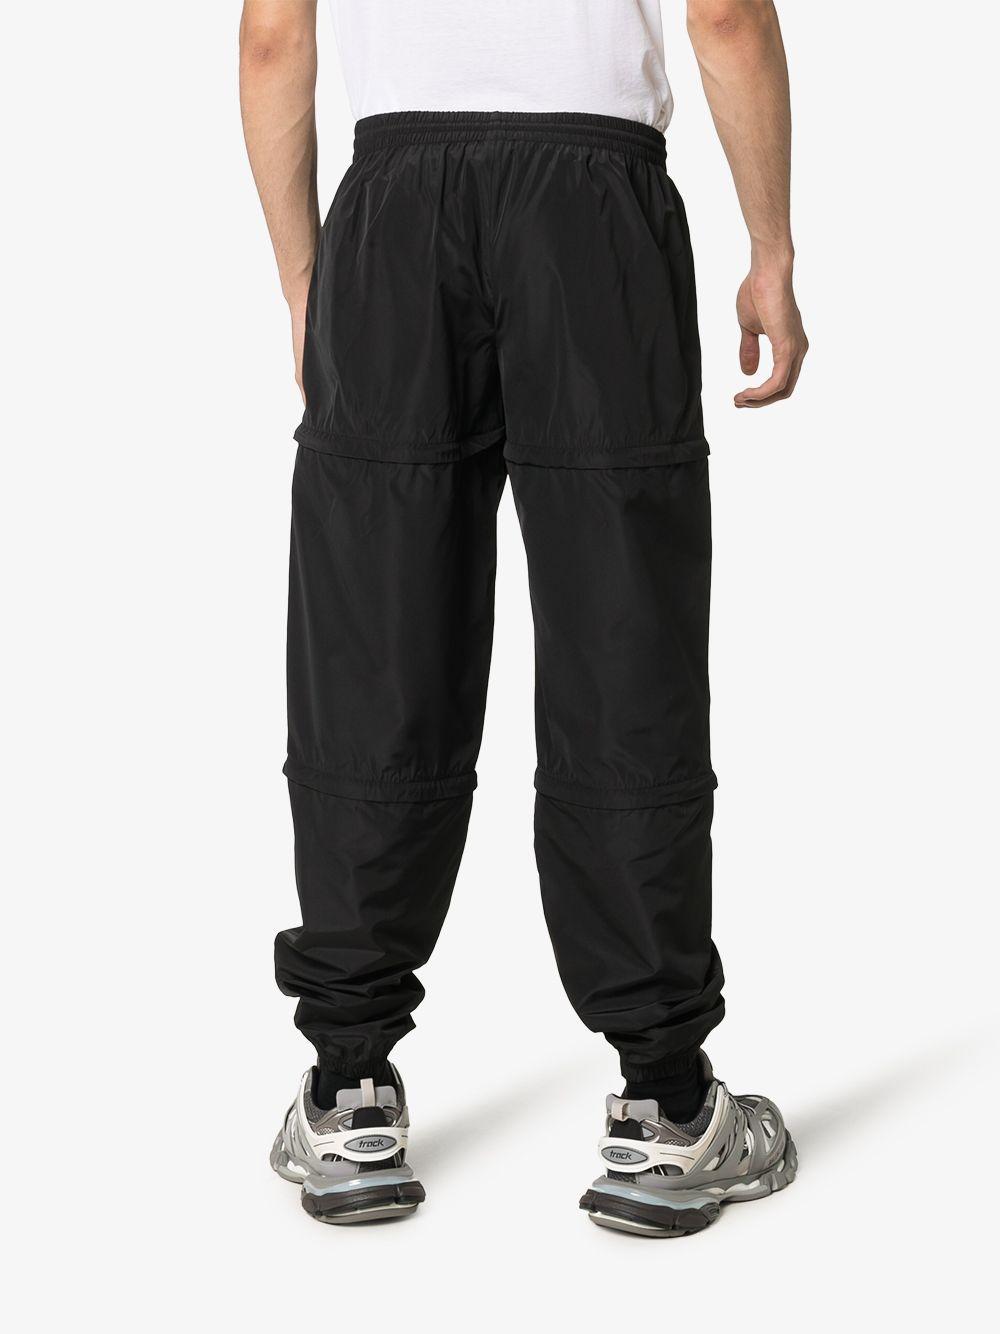 Balenciaga Zip Off Track Pants in Black for Men - Lyst